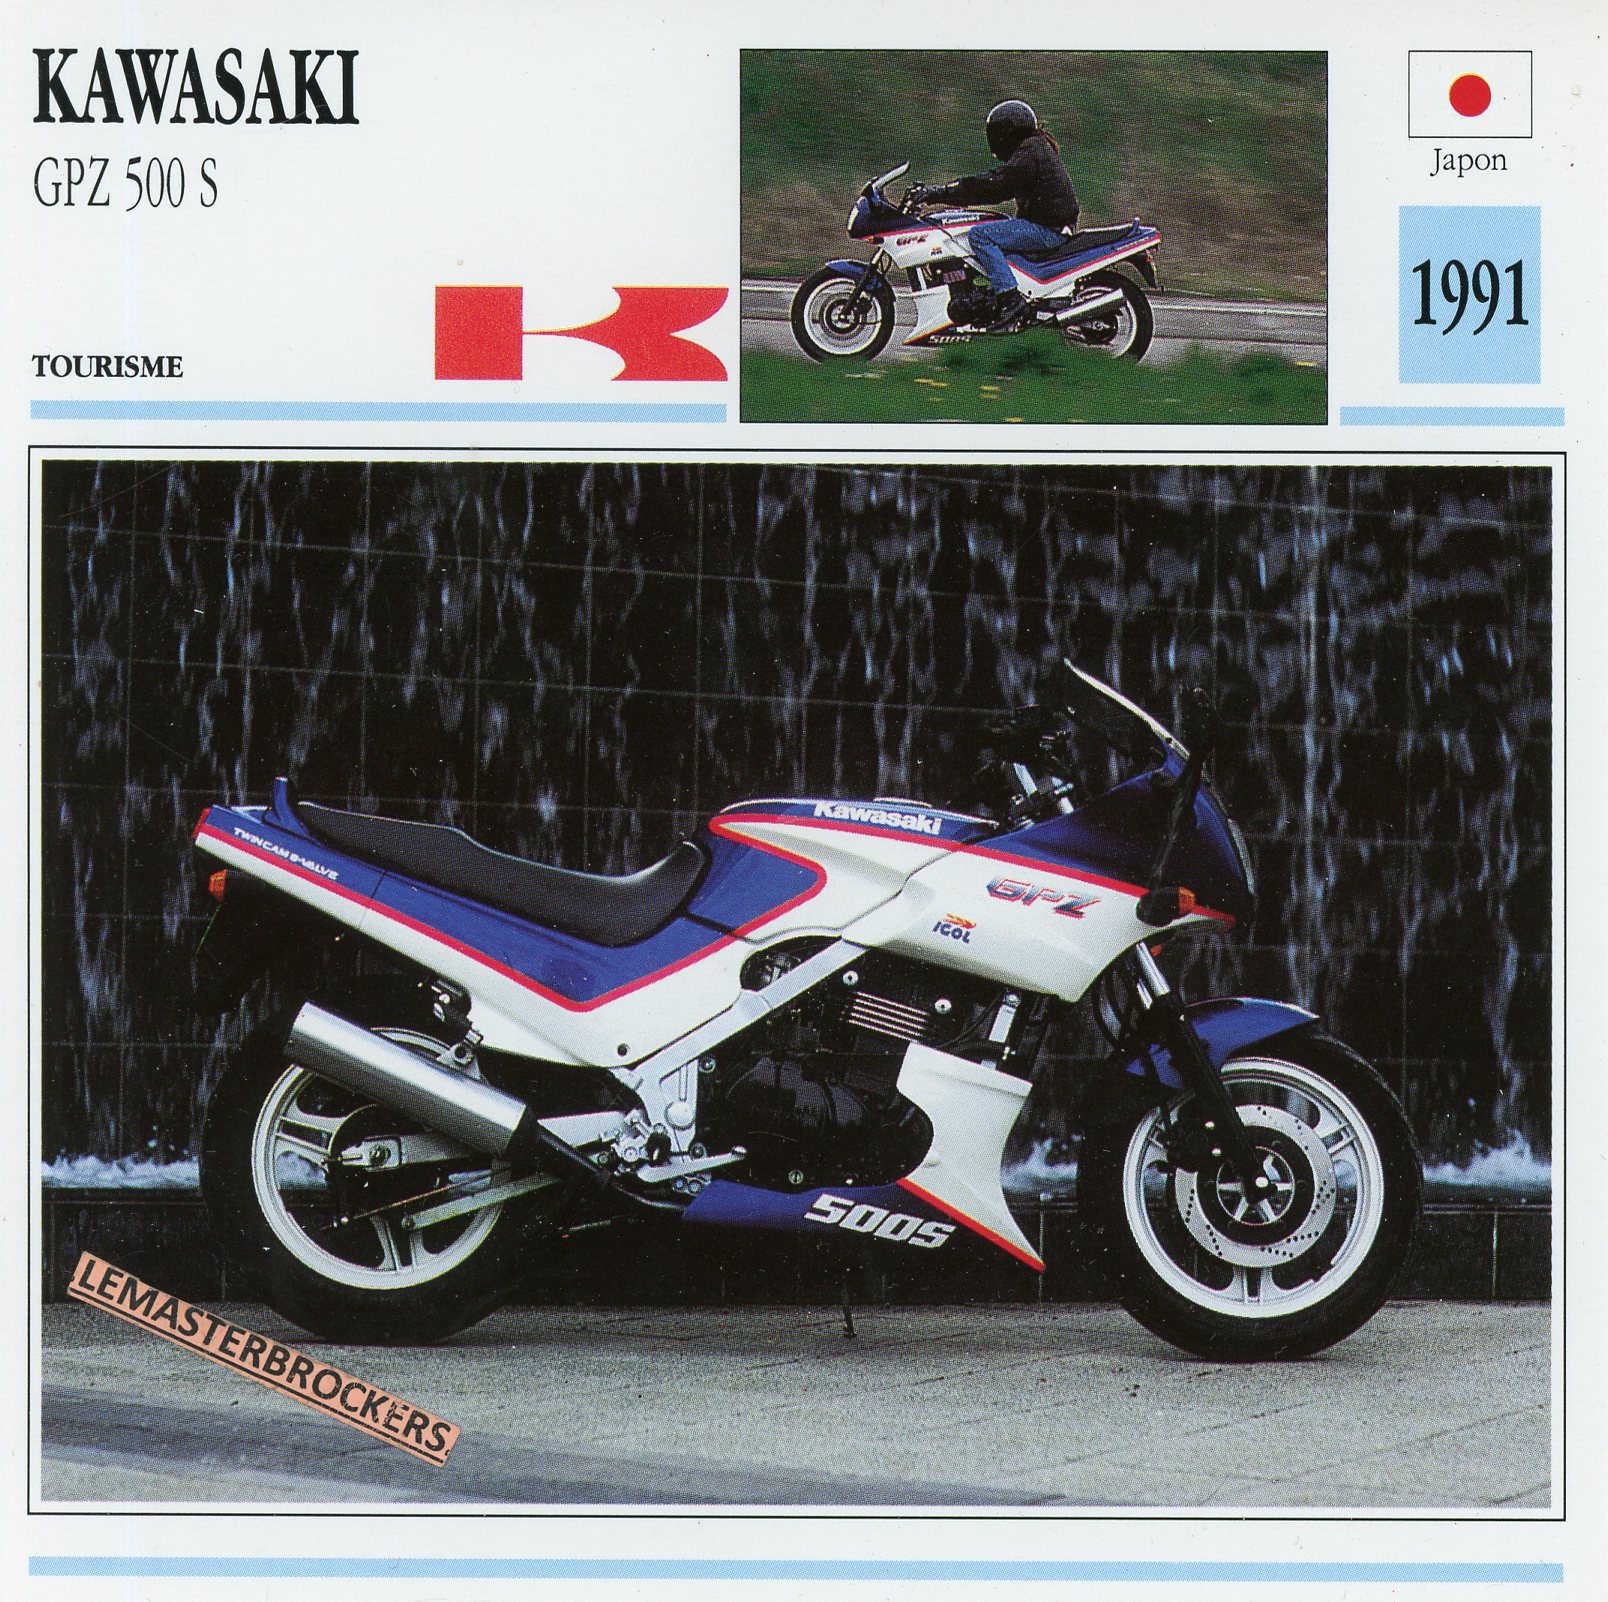 KAWASAKI-GPZ-500S-1991-FICHE-MOTO-KAWASAKI-GPZ500-LEMASTERBROCKERS